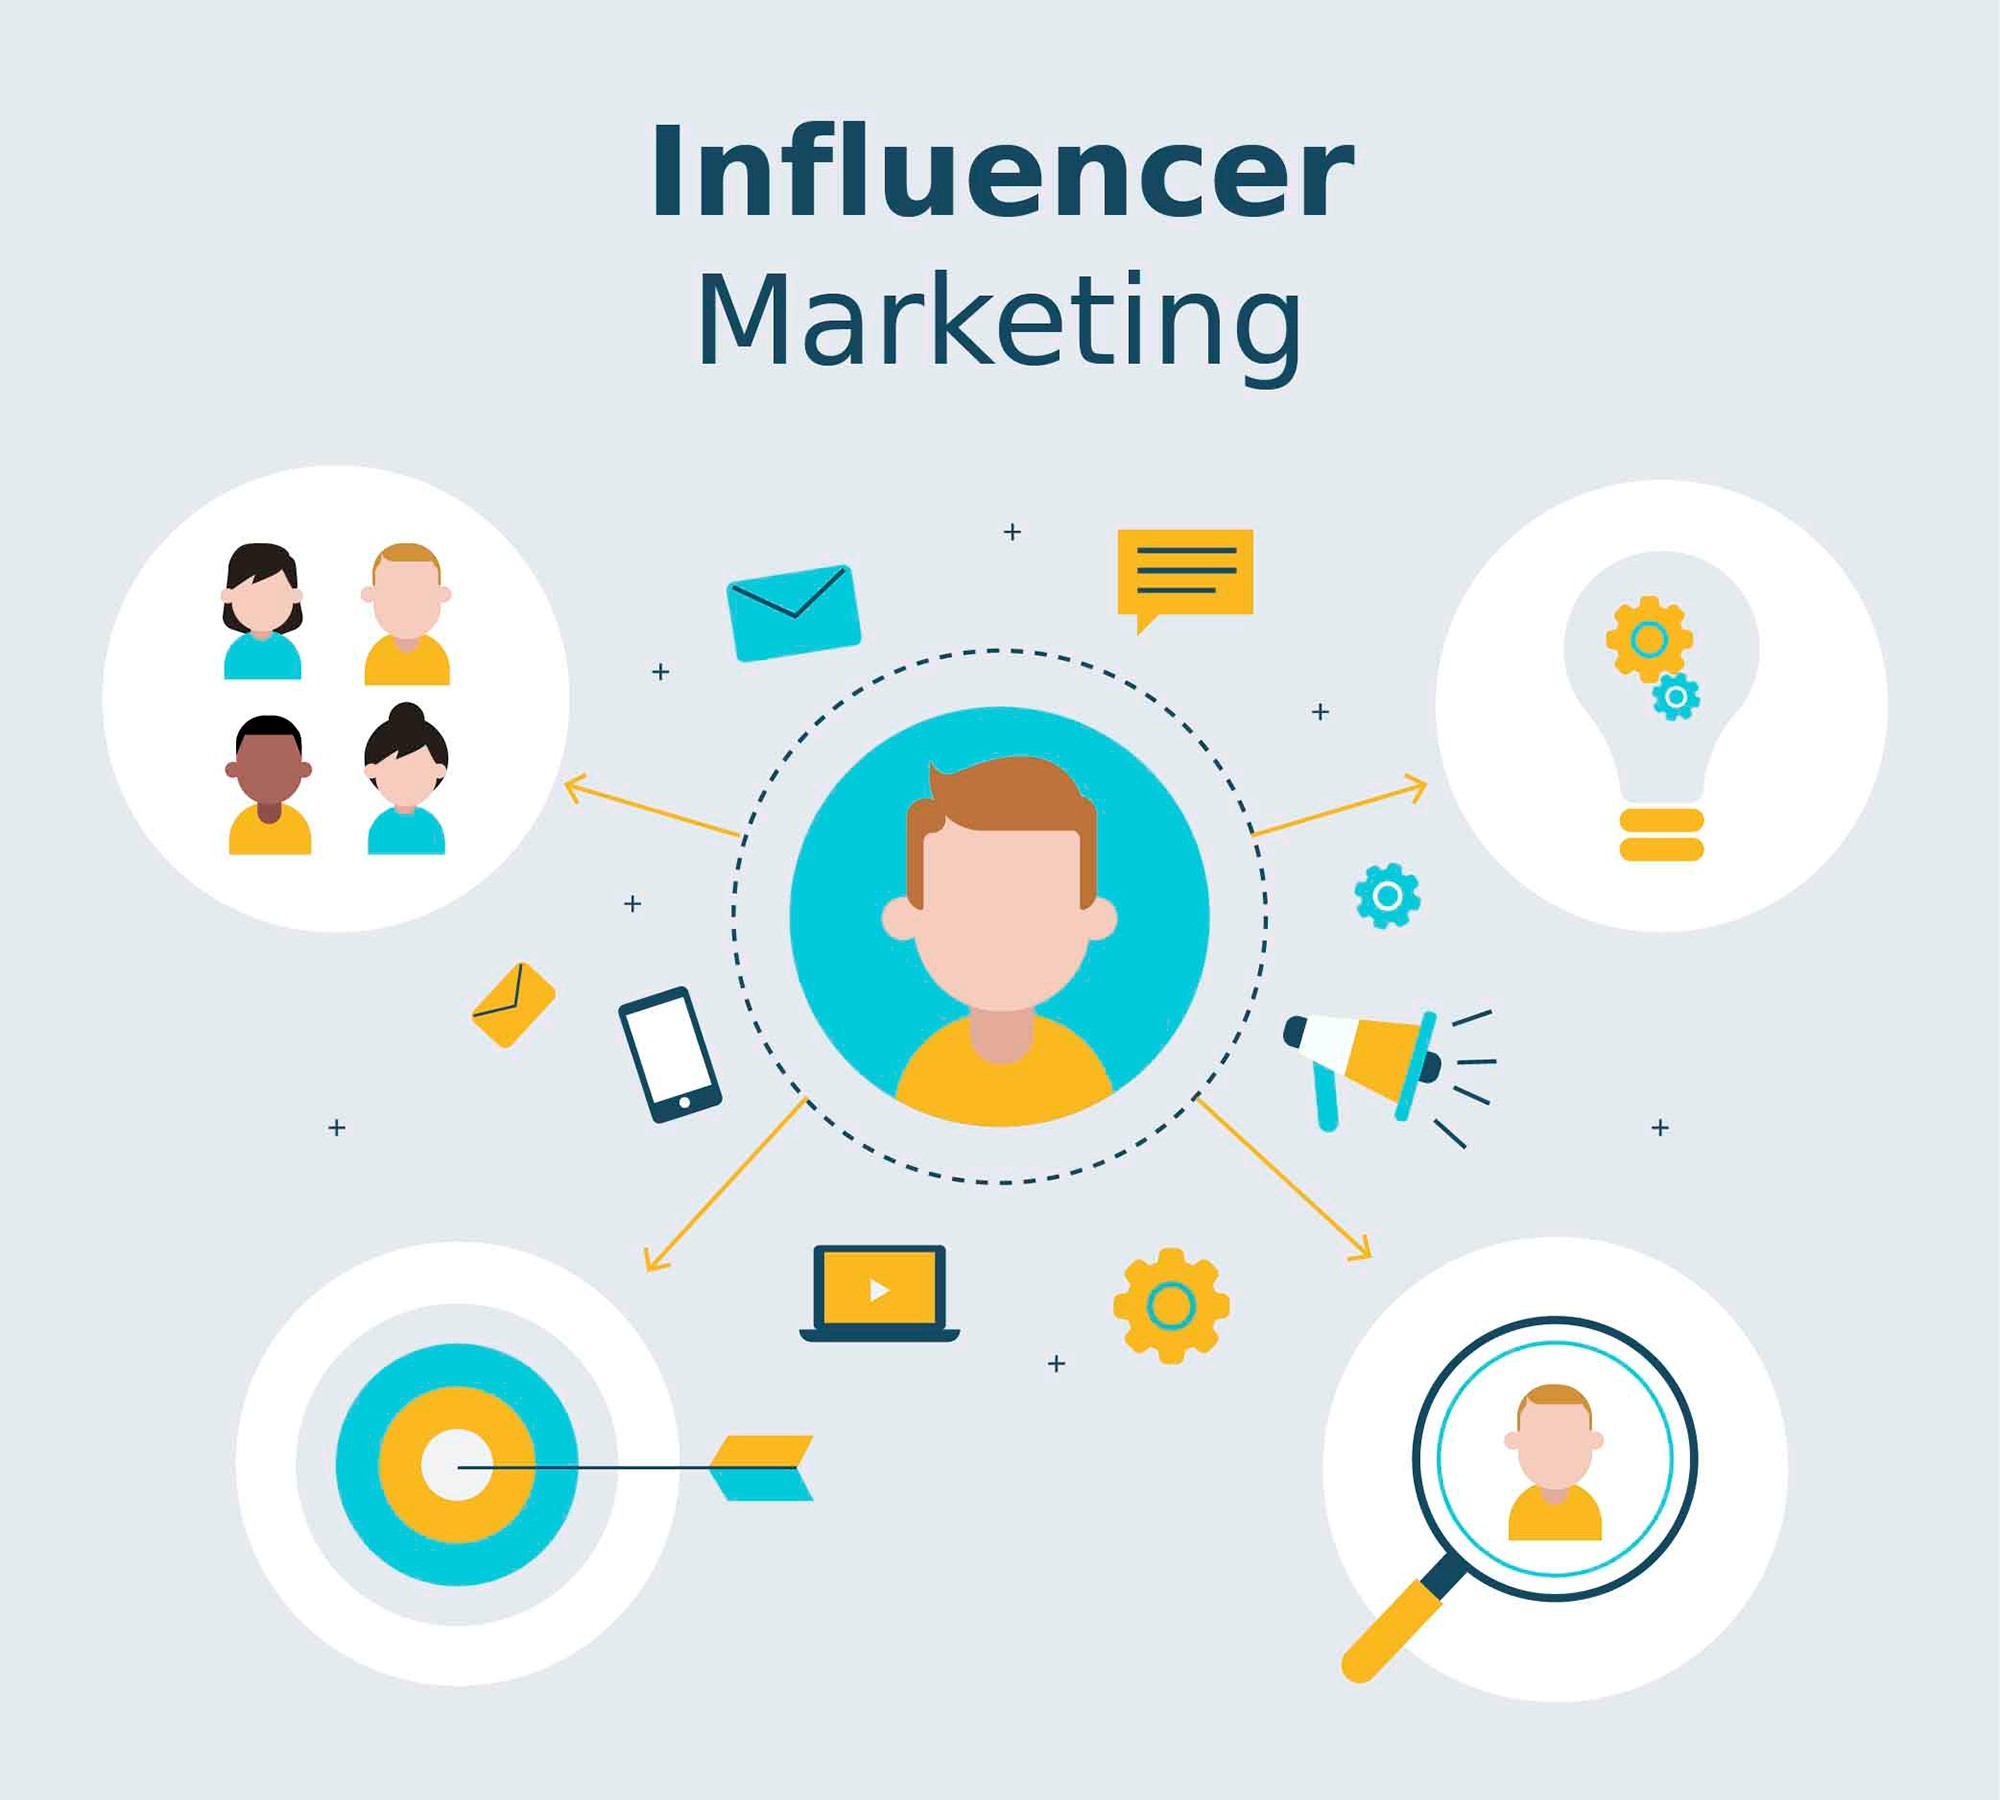 Influencer marketing